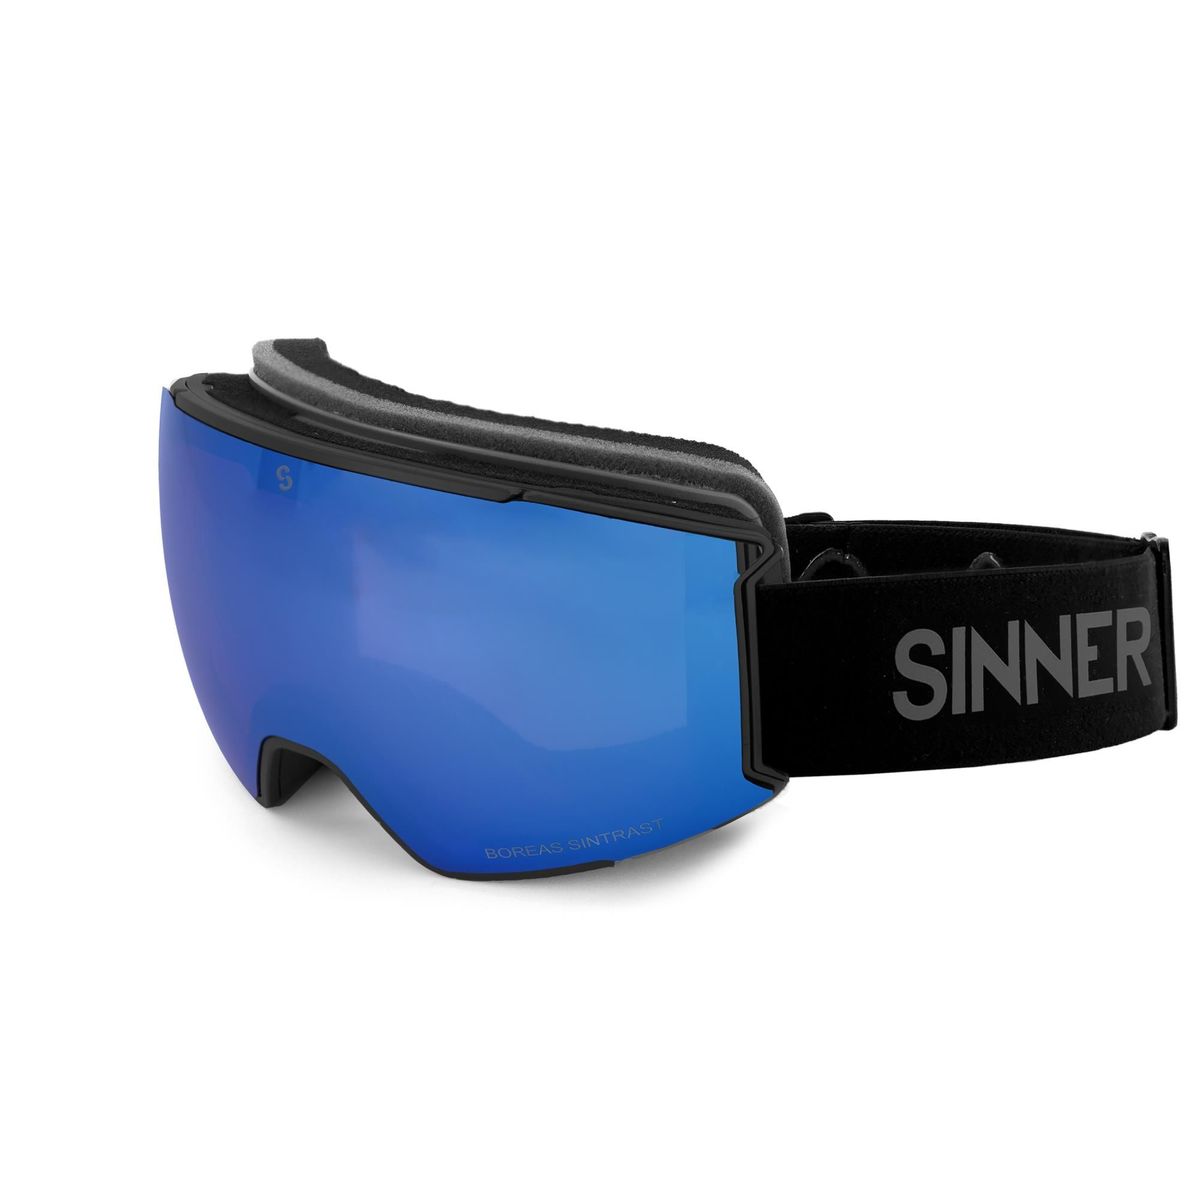 Sinner BOREAS skibril mat zwart/blauw + extra oranje S1 lens